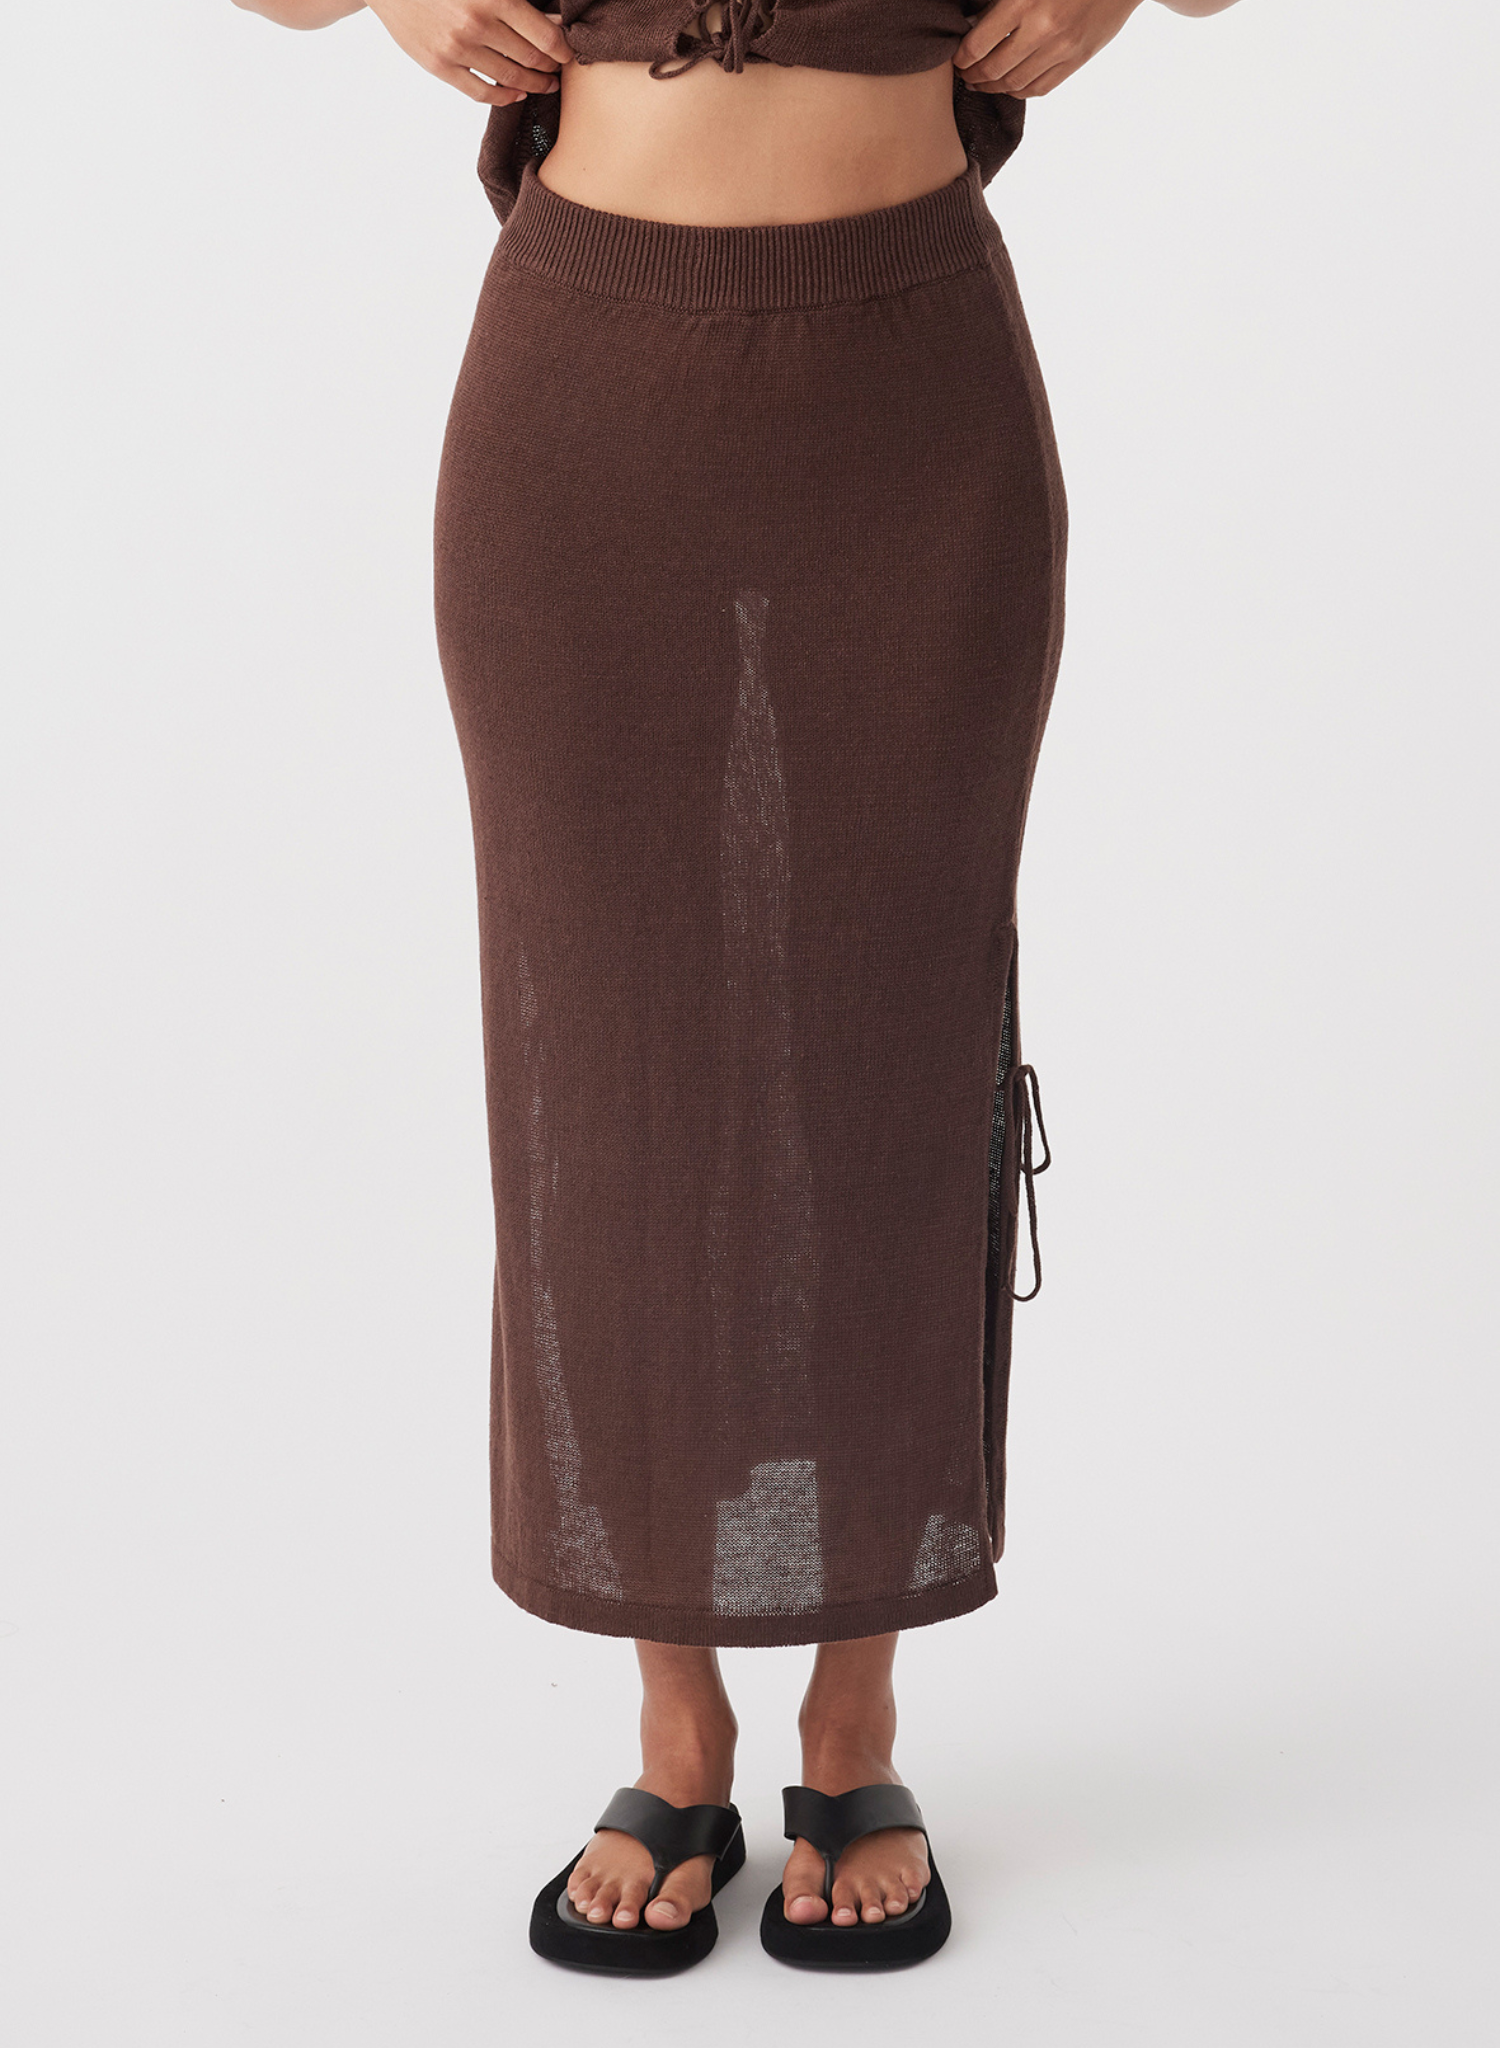 Pearla Skirt in Chocolate